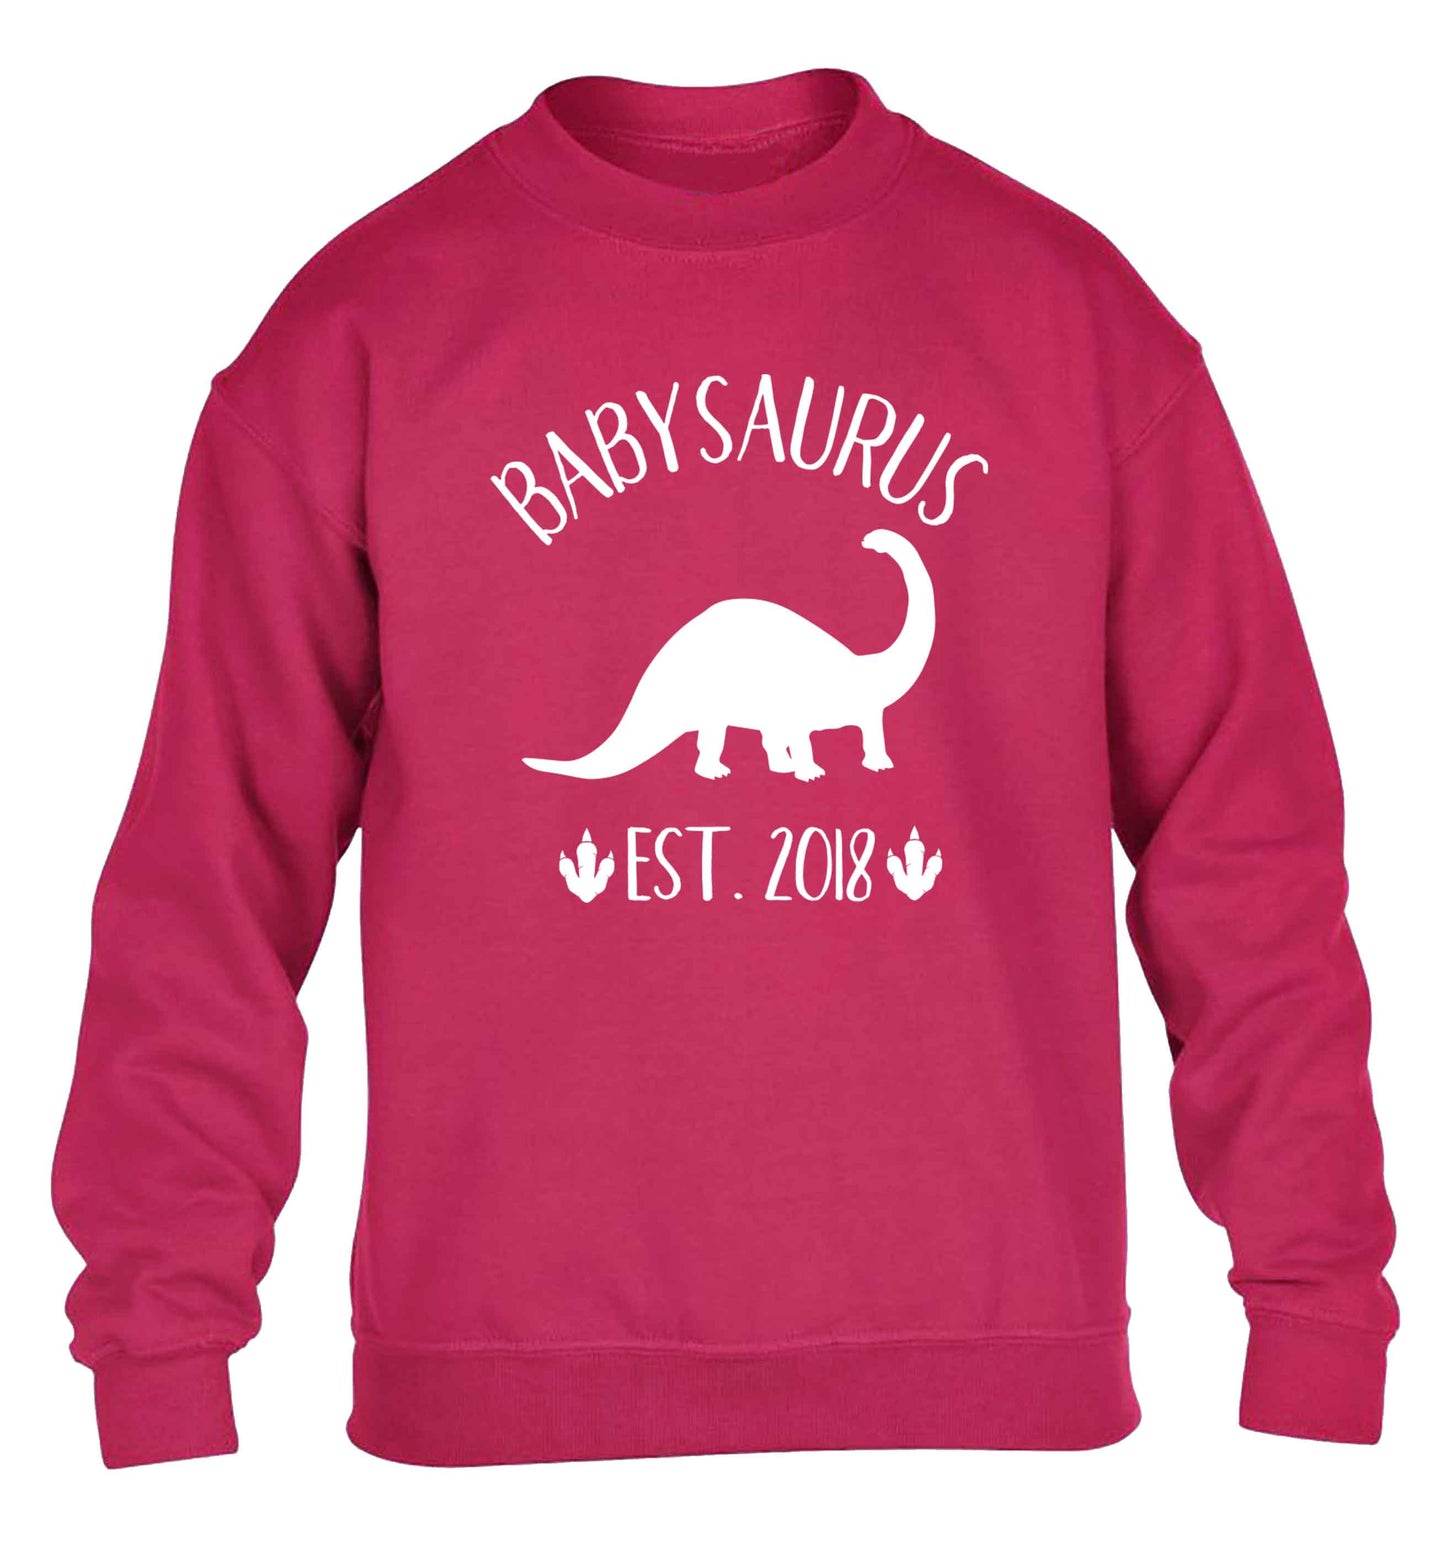 Personalised babysaurus since (custom date) children's pink sweater 12-13 Years